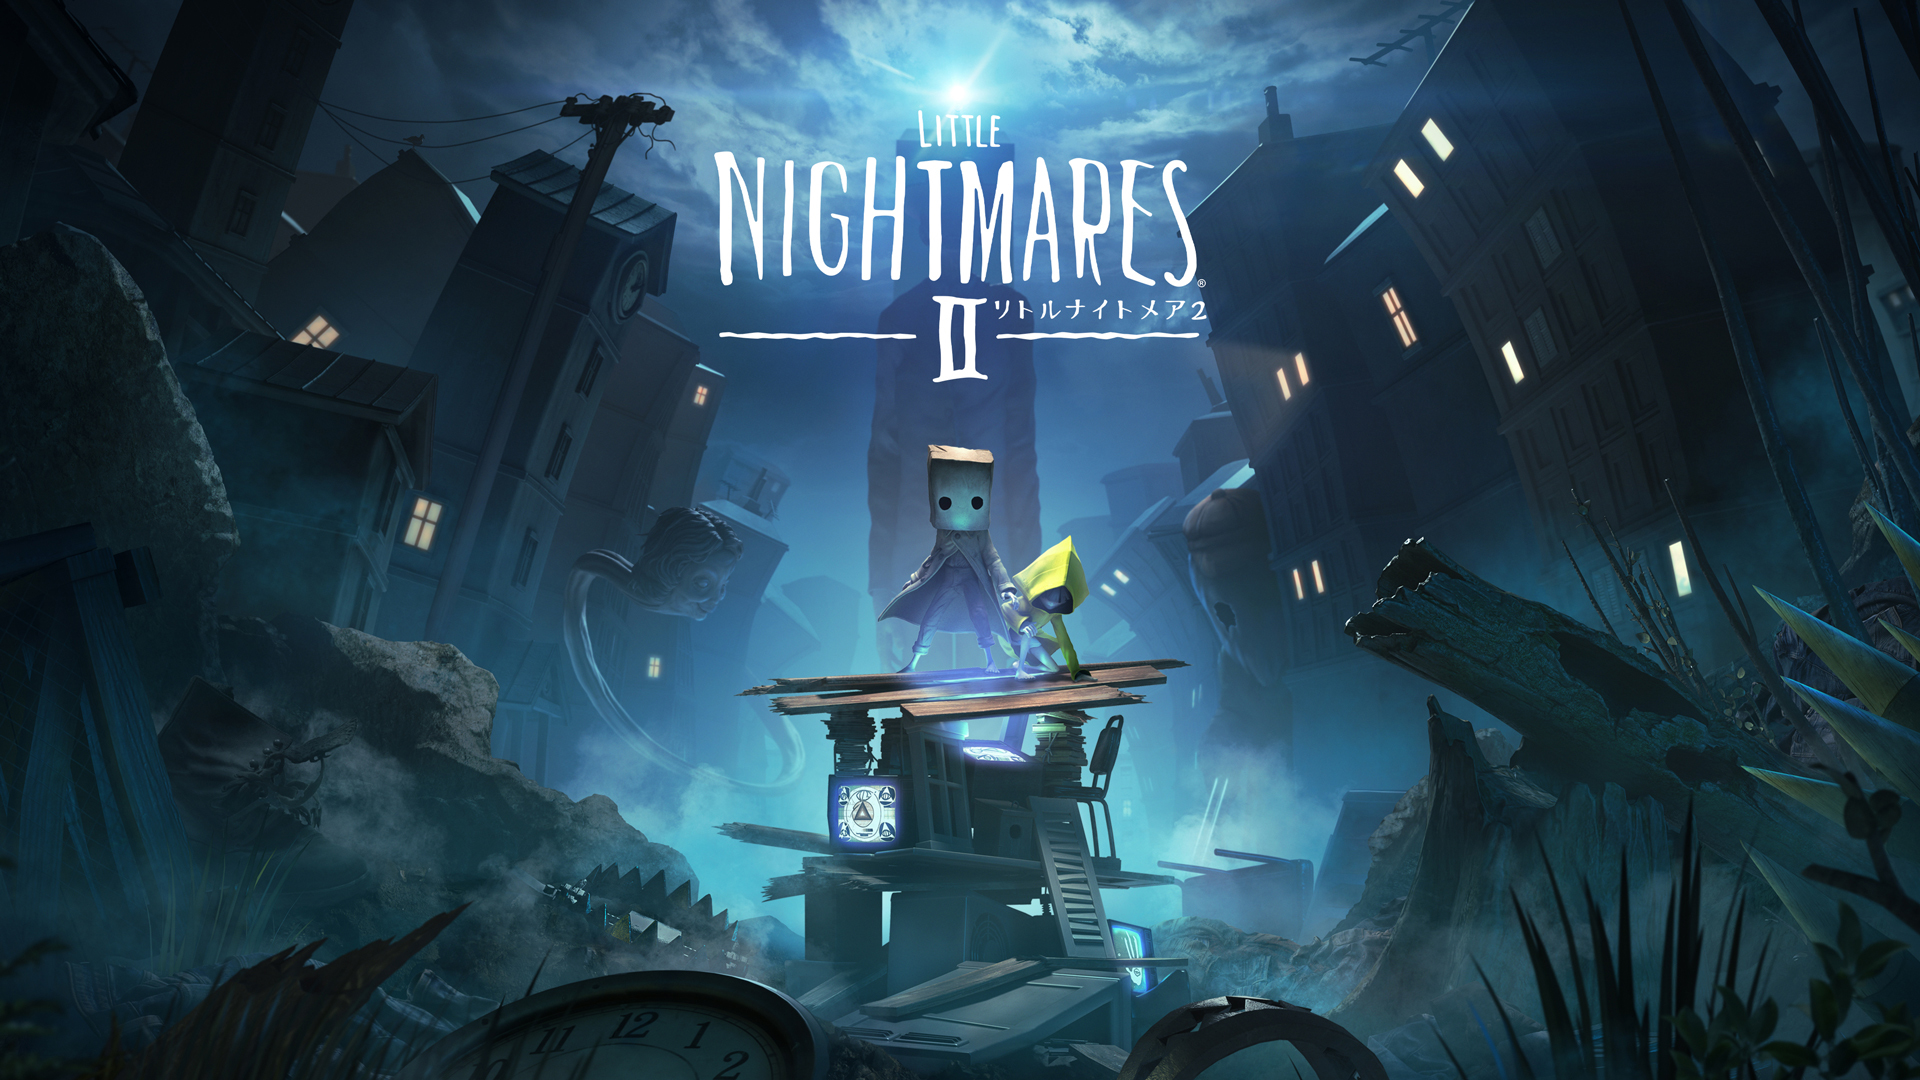 Little Nightmares 2: Enhanced Edition, PS5 Update vs PS4